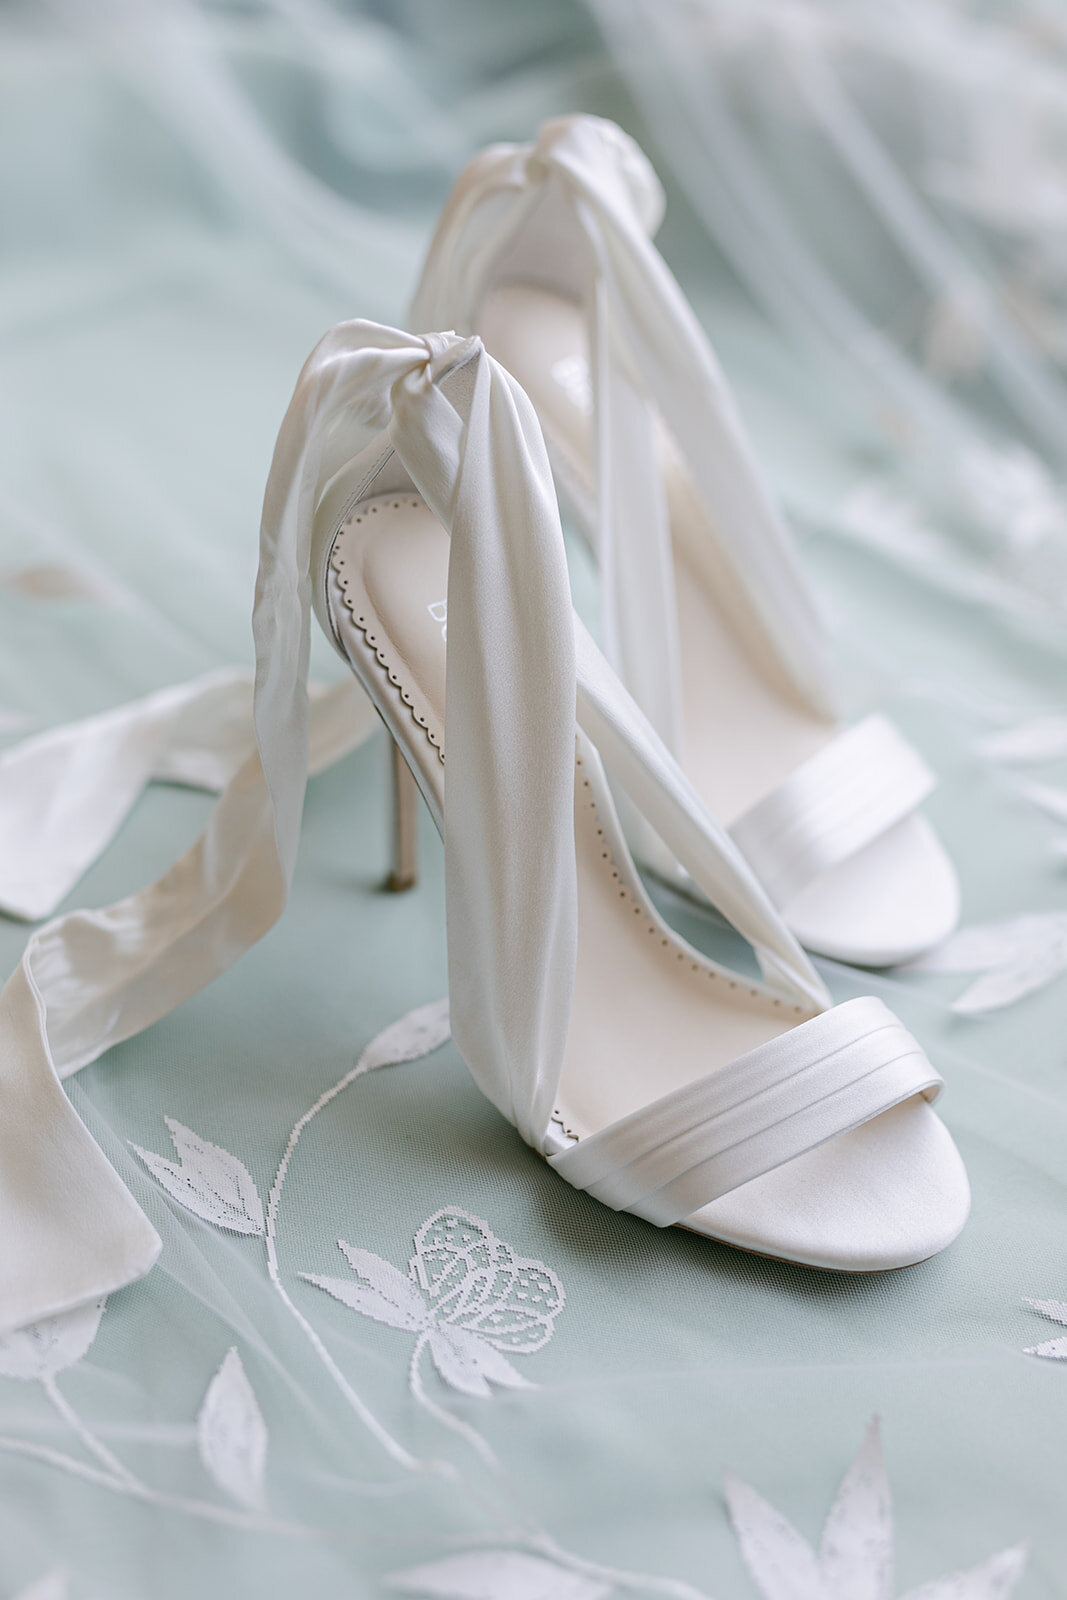 bella belle white wedding shoes